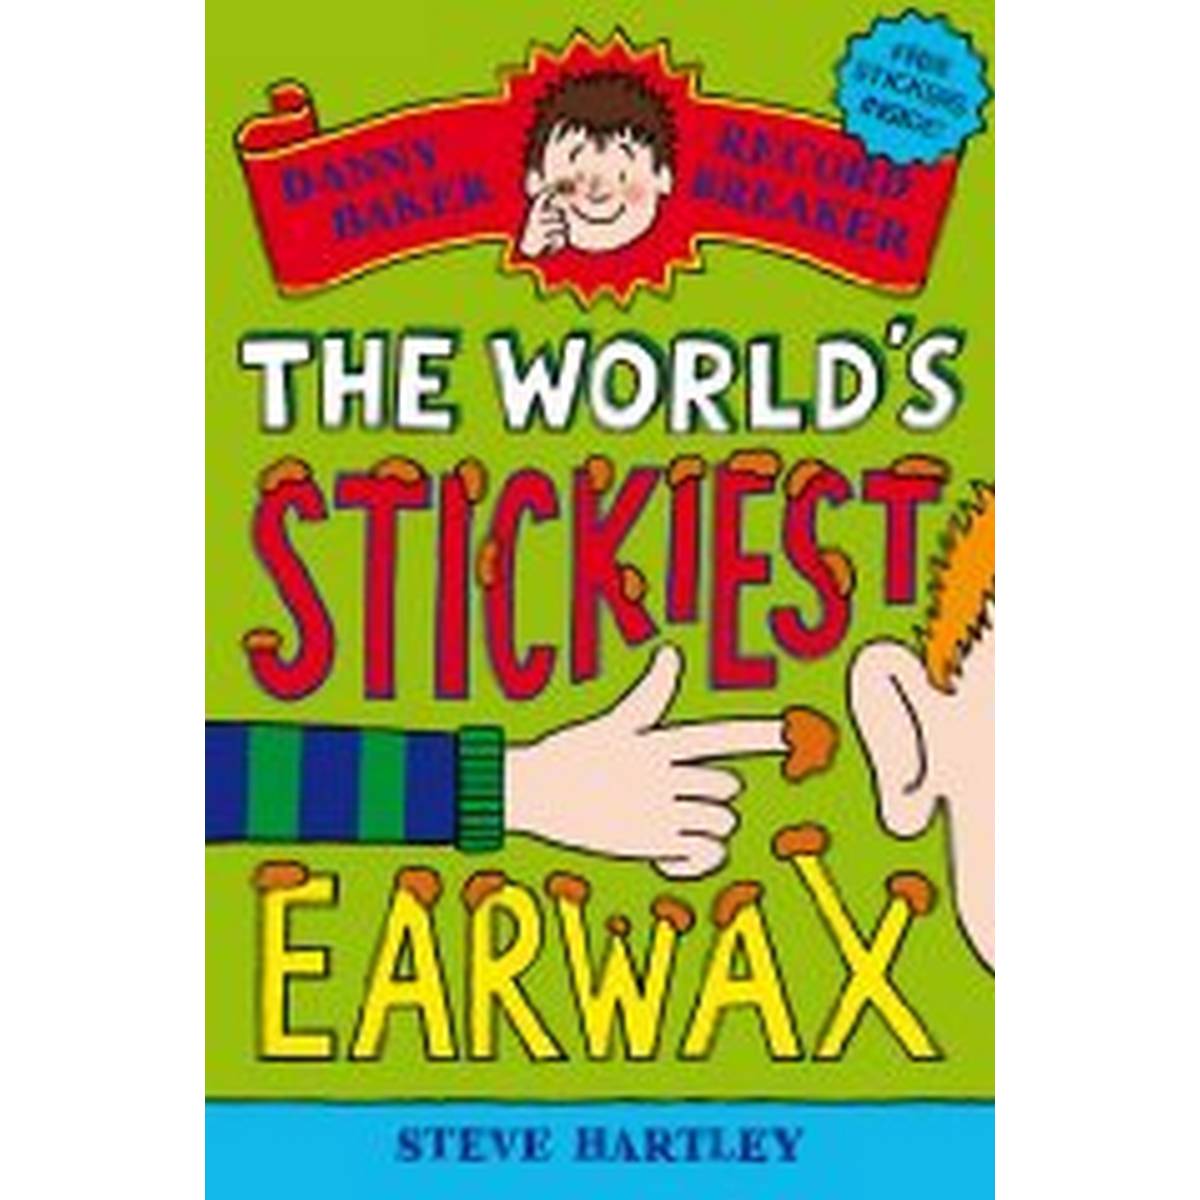 Danny Baker Record Breaker: The World's Stickiest Earwax